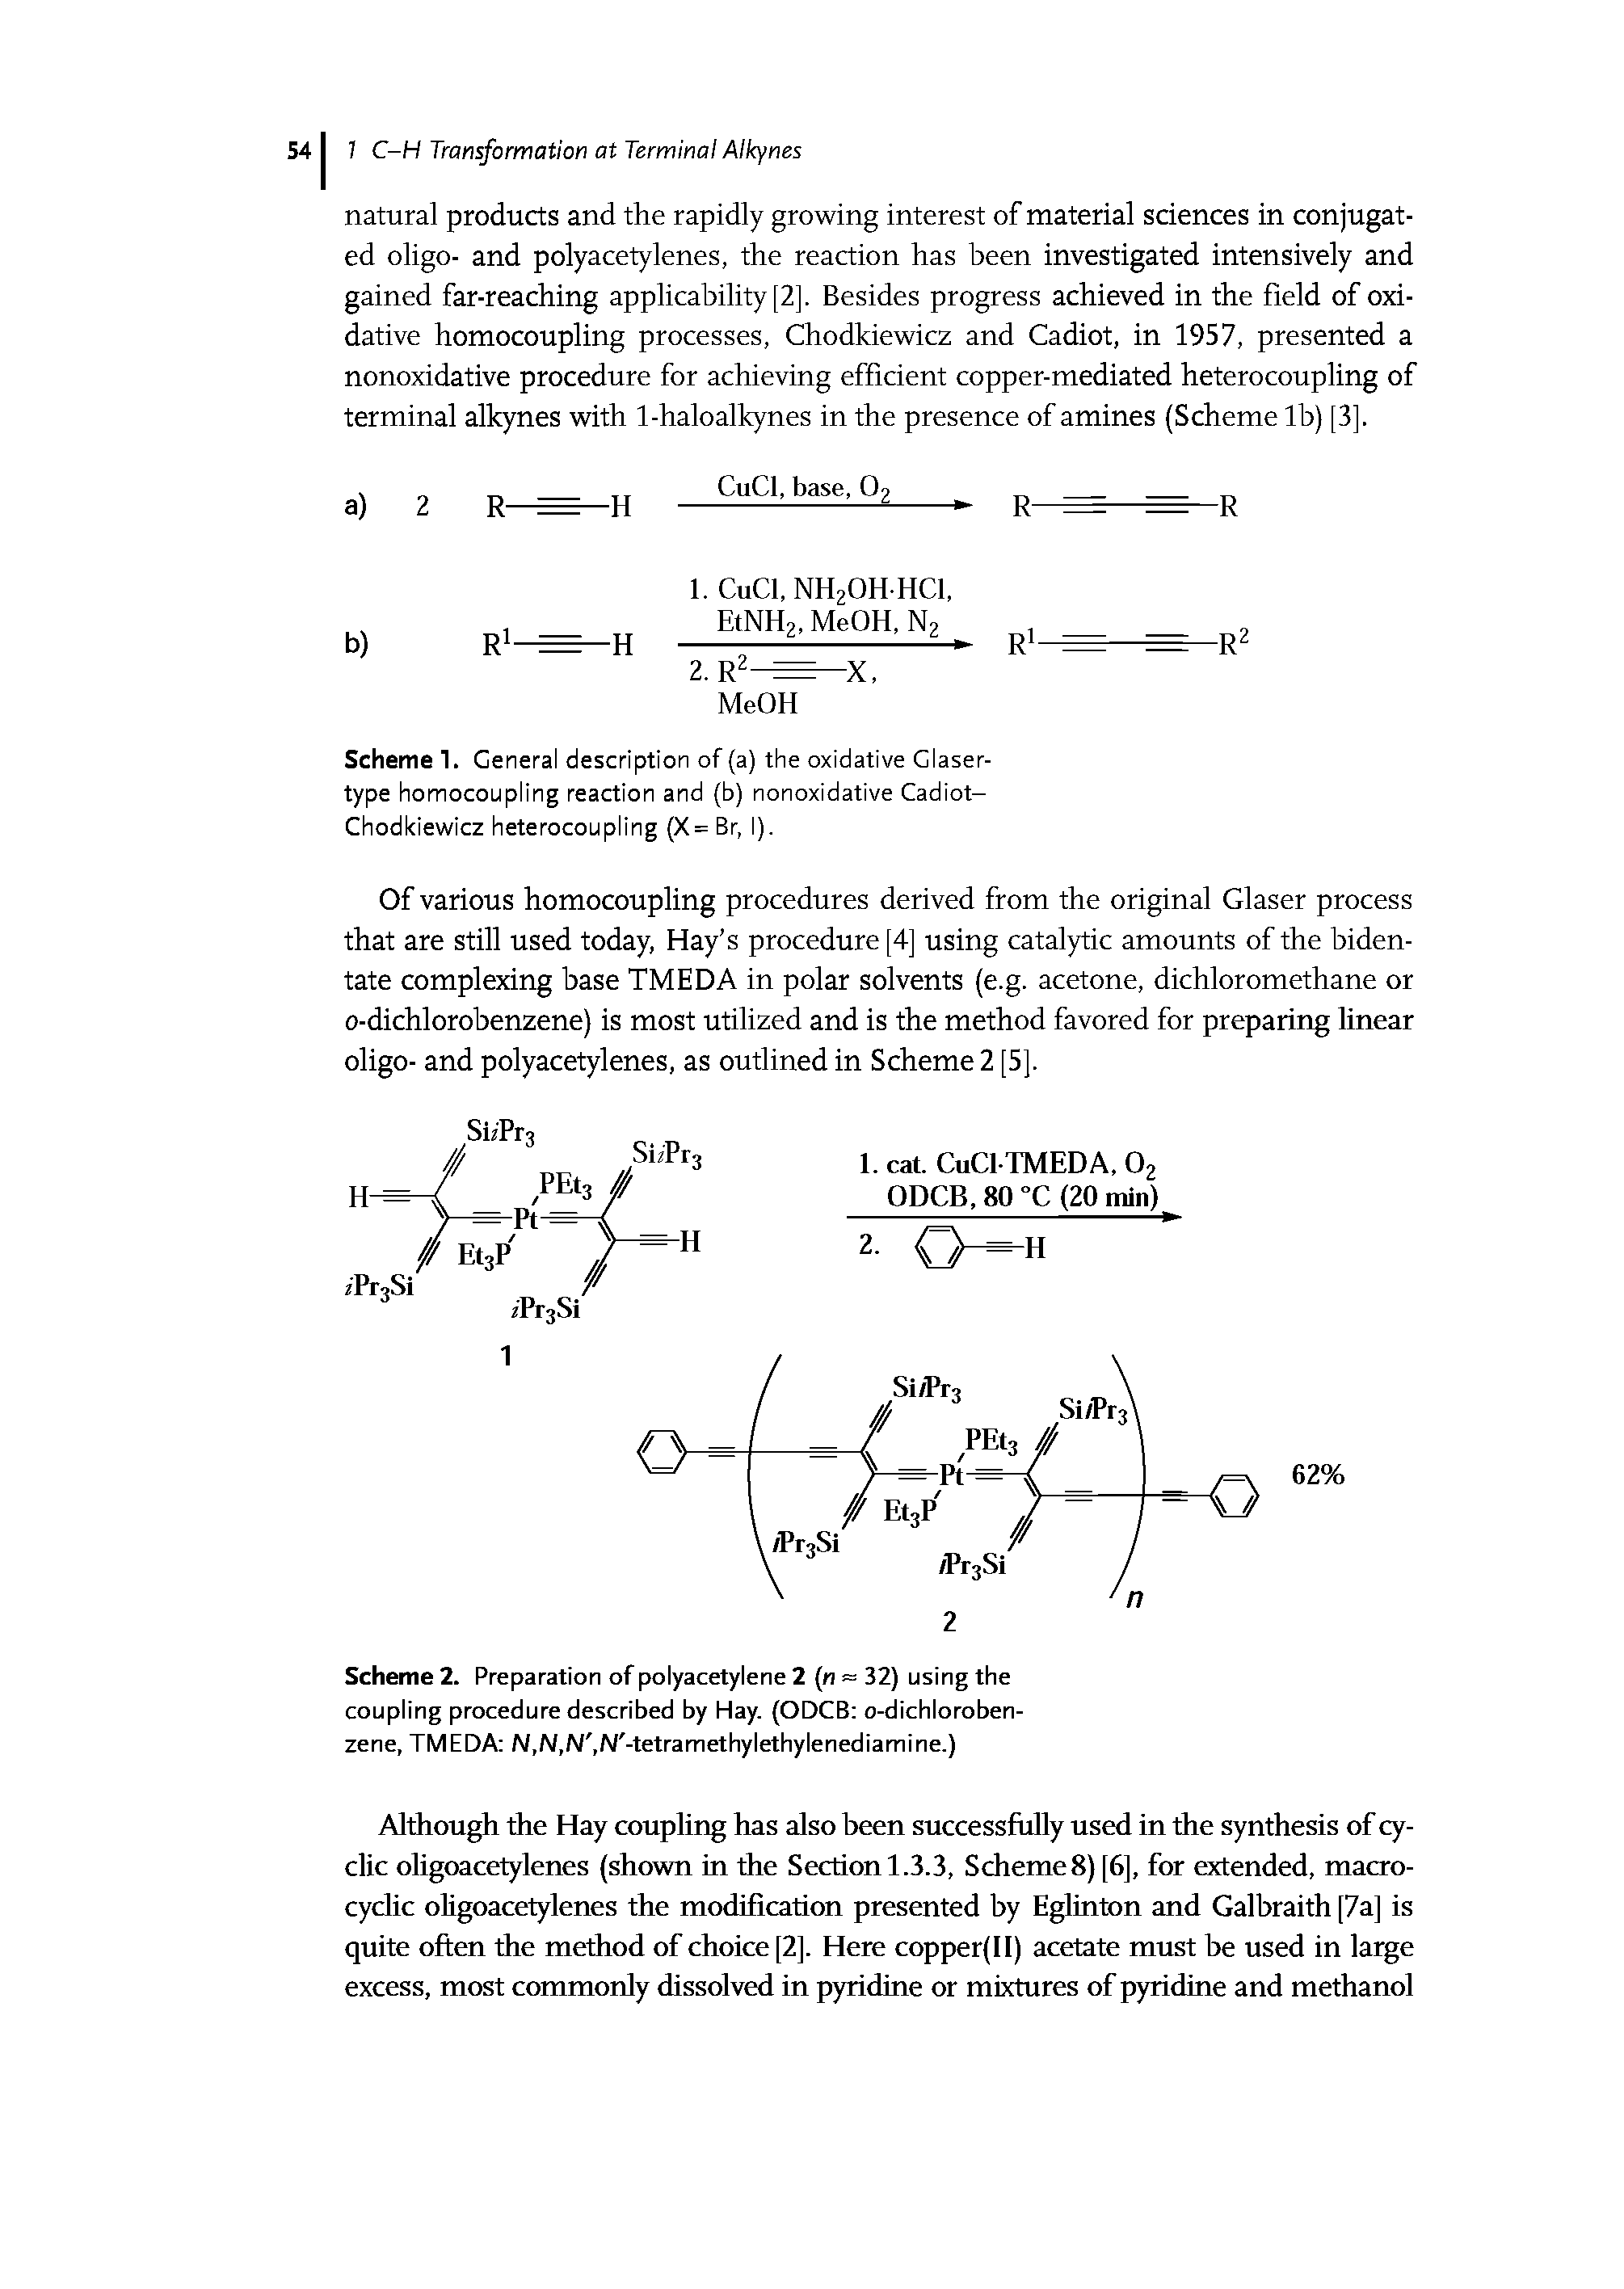 Scheme 1. General description of (a) the oxidative Glaser-type homocoupling reaction and (b) nonoxidative Cadiot-Chodkiewicz heterocoupling (X= Br, I).